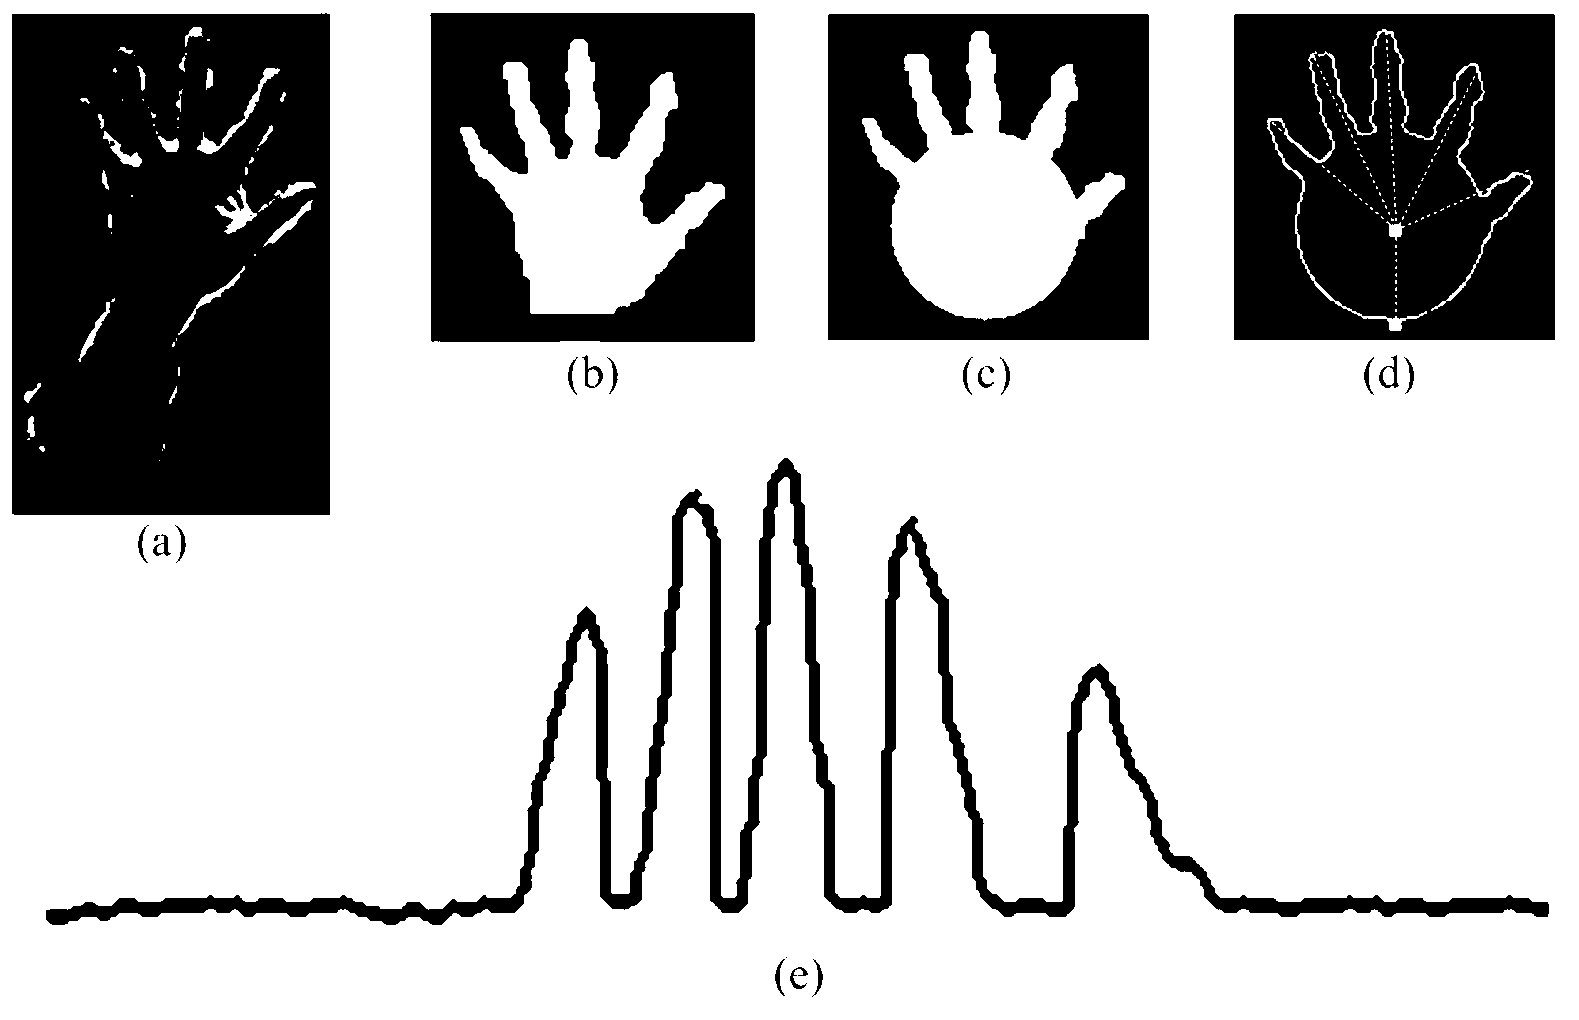 3D gesture recognition method